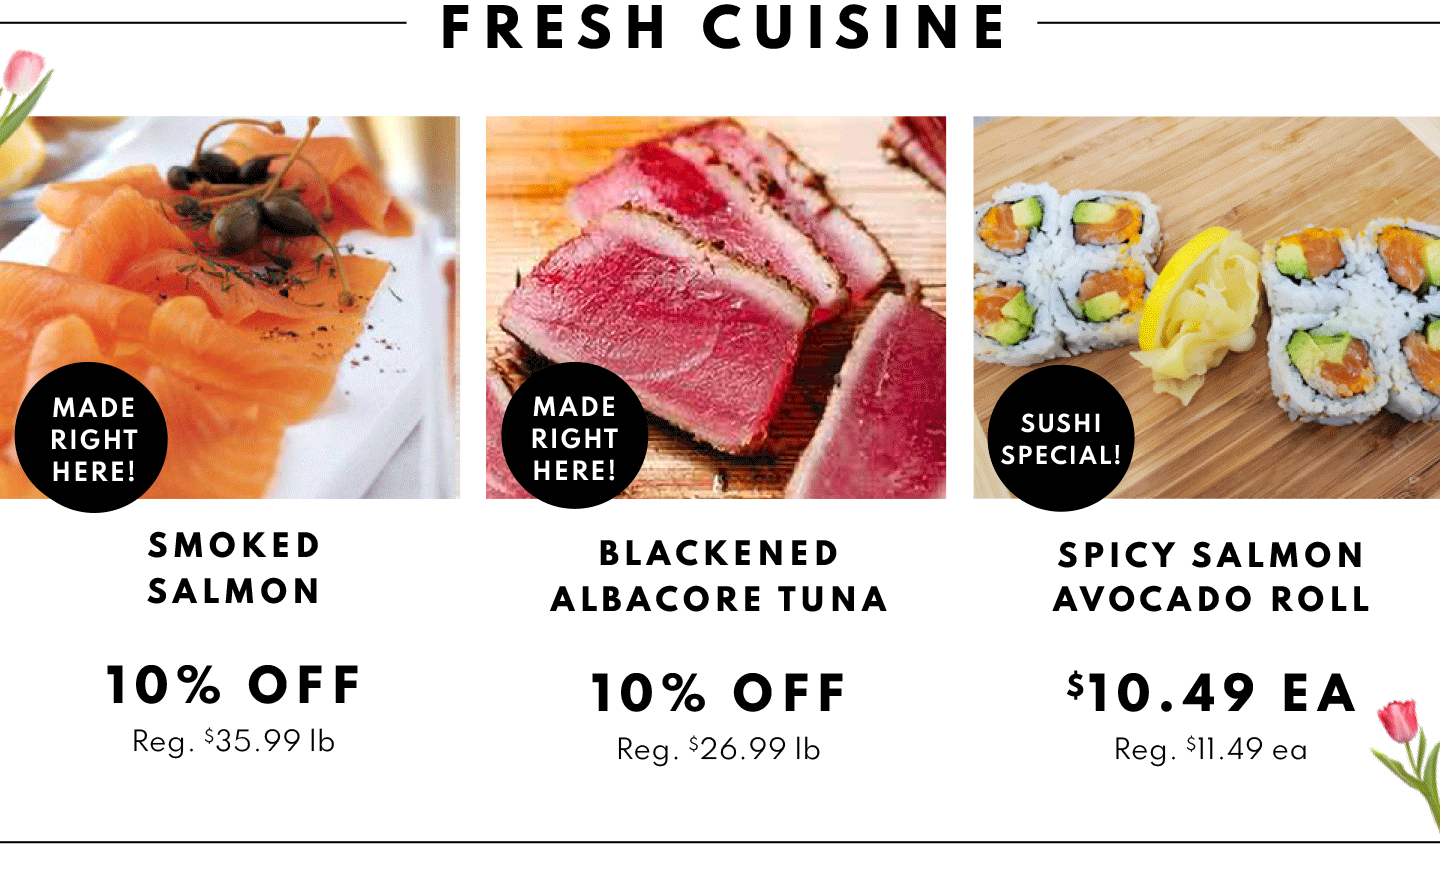 Fresh Cuisine: Smoked Salmon 10% OFF, Blackened Albacore Tuna 10% Off and Spicy Salmon Avocado Roll $10.49 ea